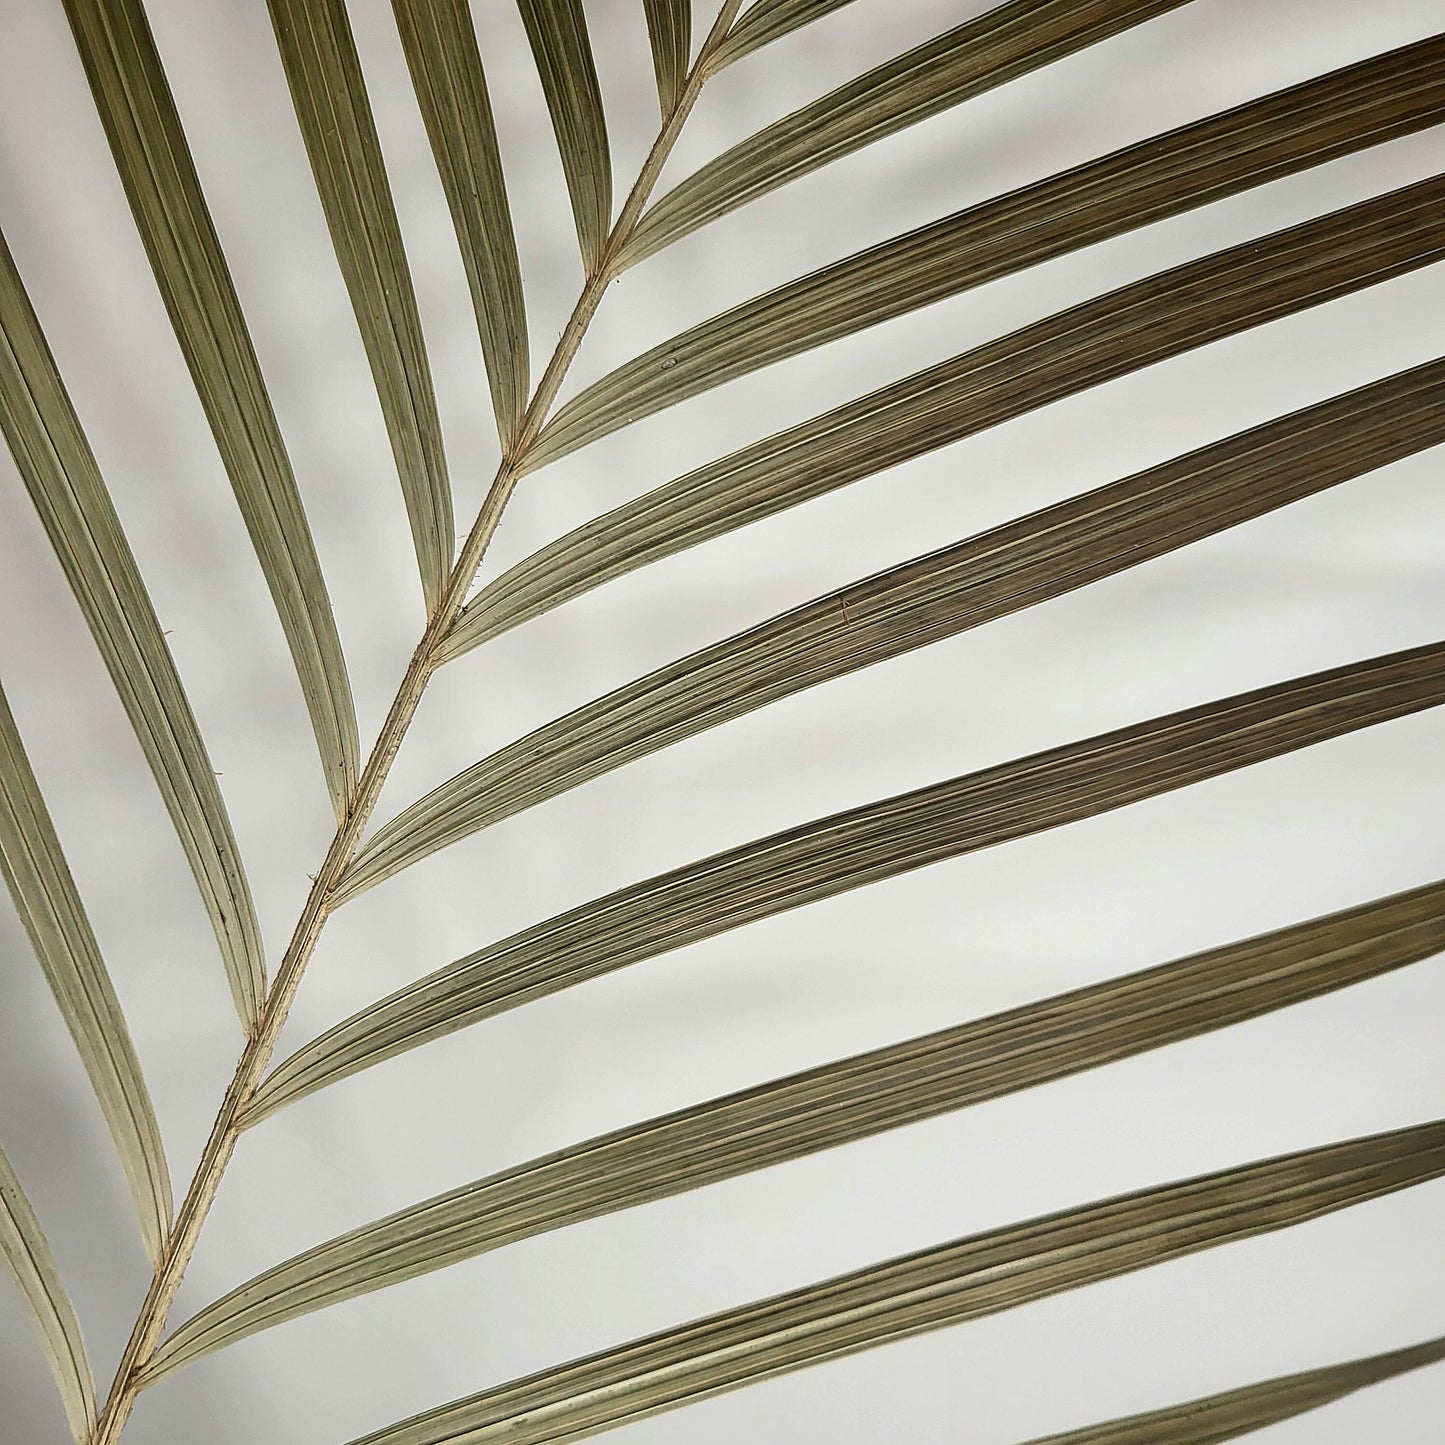 Areca palm leaves (90cm)